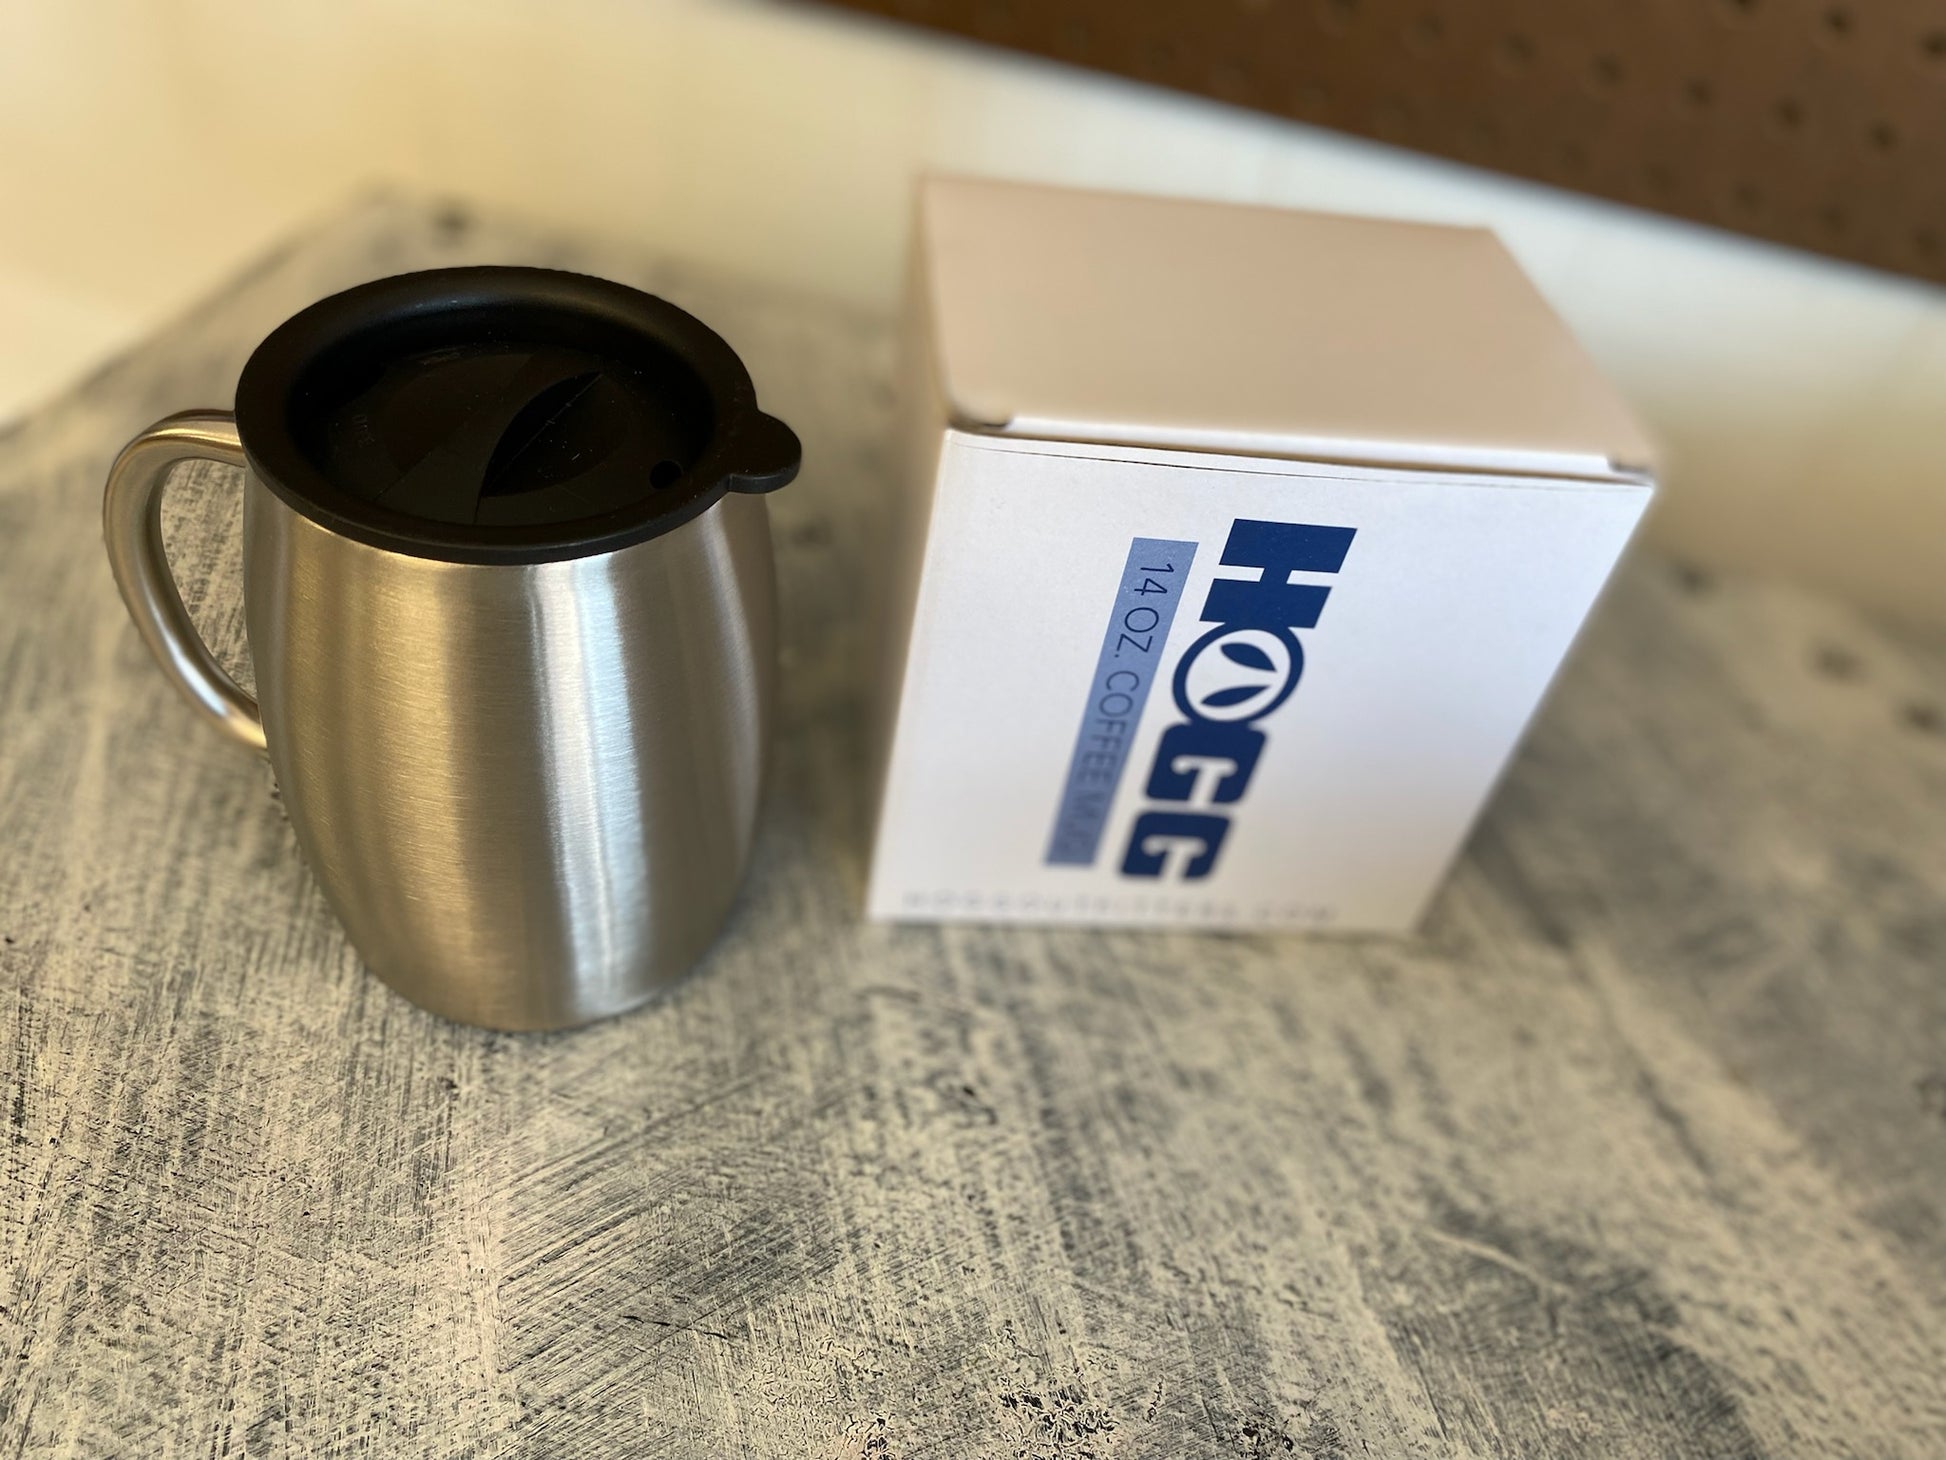 14 oz Stainless Steel Coffee Mug